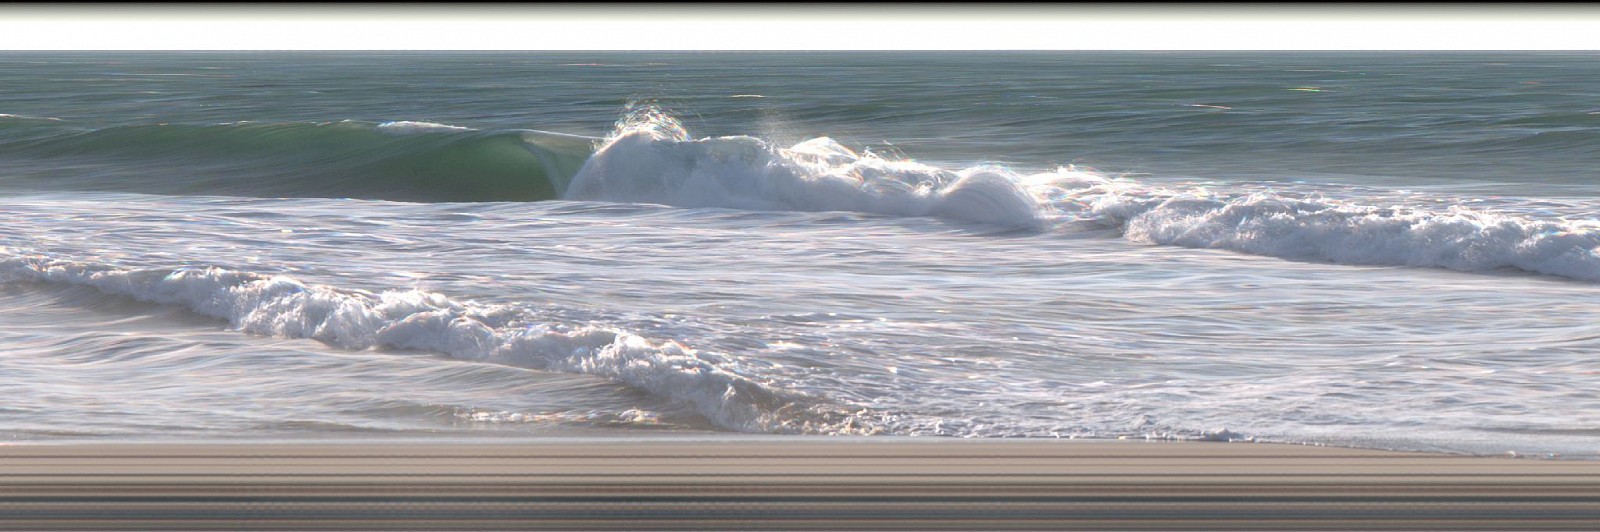 Jay Mark Johnson, VENICE BEACH WAVES #7, 2006 Venice Beach CA
archival pigment on paper, mounted on aluminum, 40 x 120 in. (101.6 x 304.8 cm)